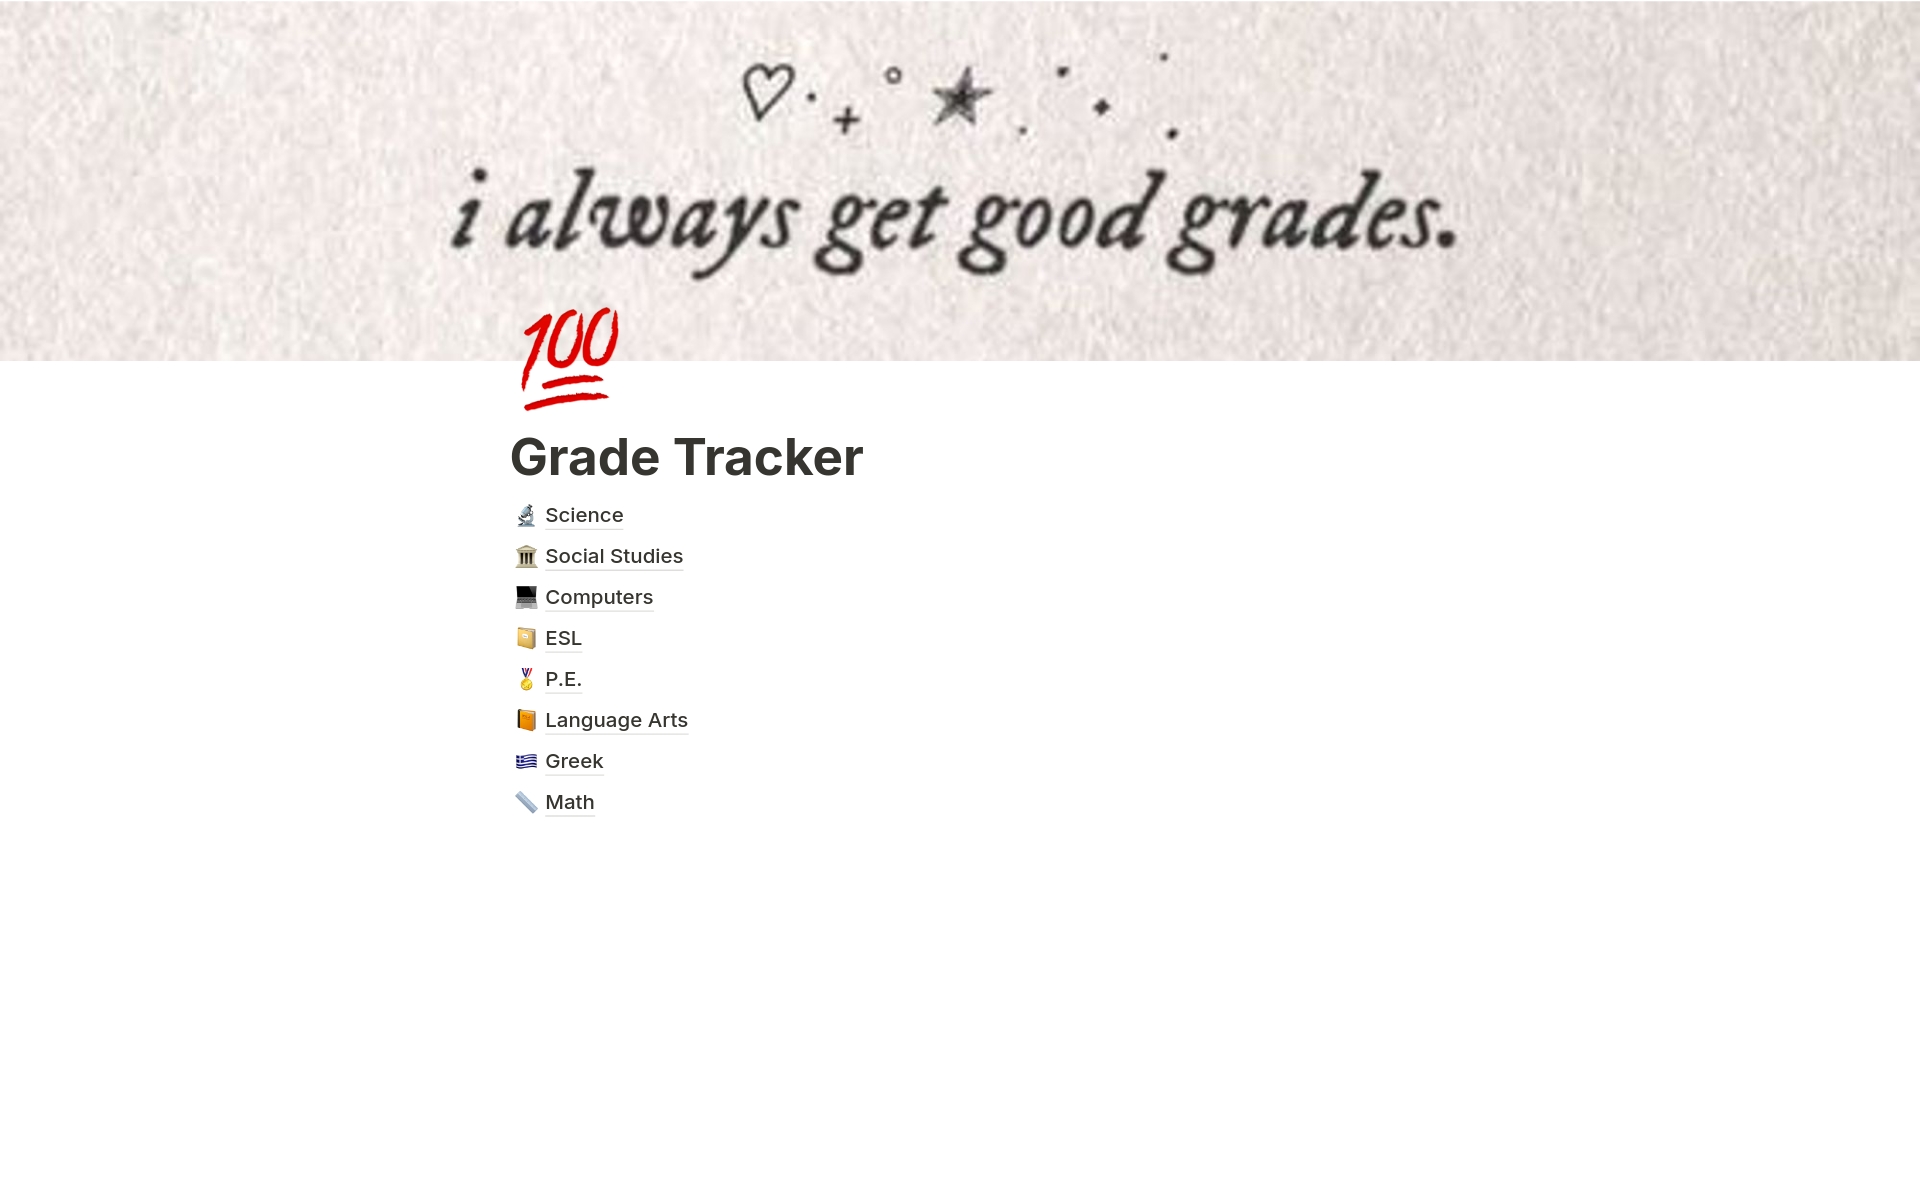 Aperçu du modèle de Grade Tracker